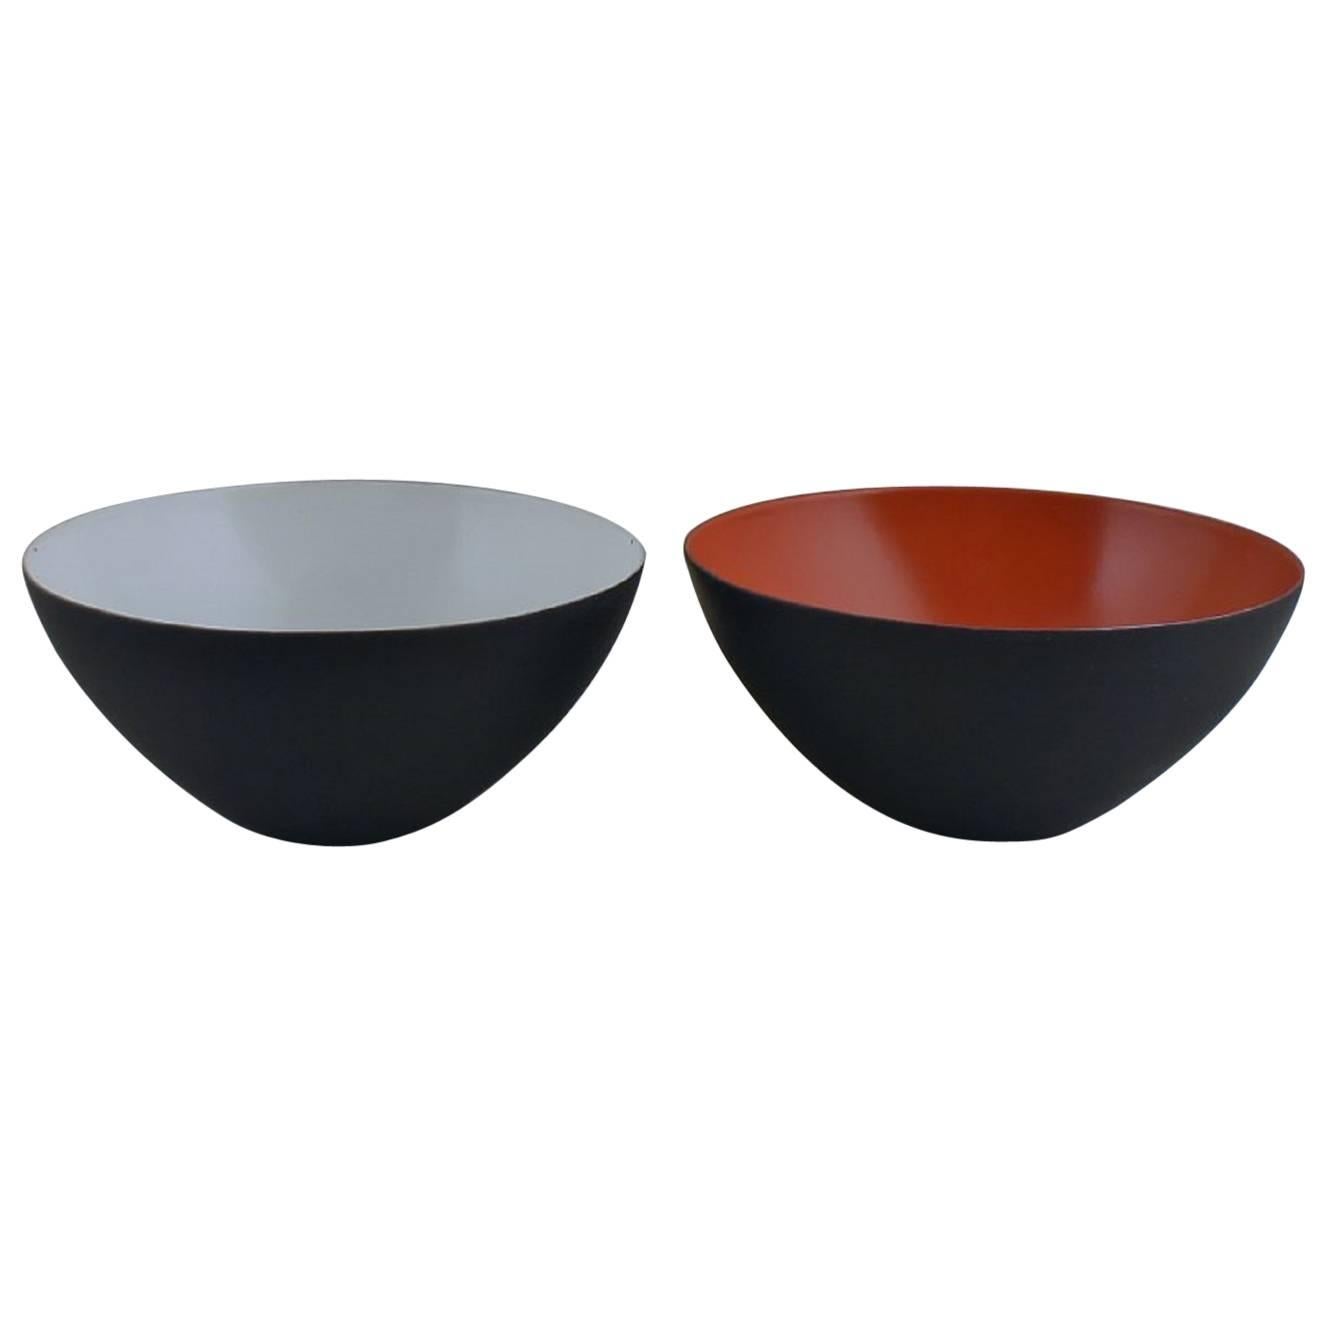 Two Krenit Bowls by Herbert Krenchel, Black Metal, White and Orange Enamel